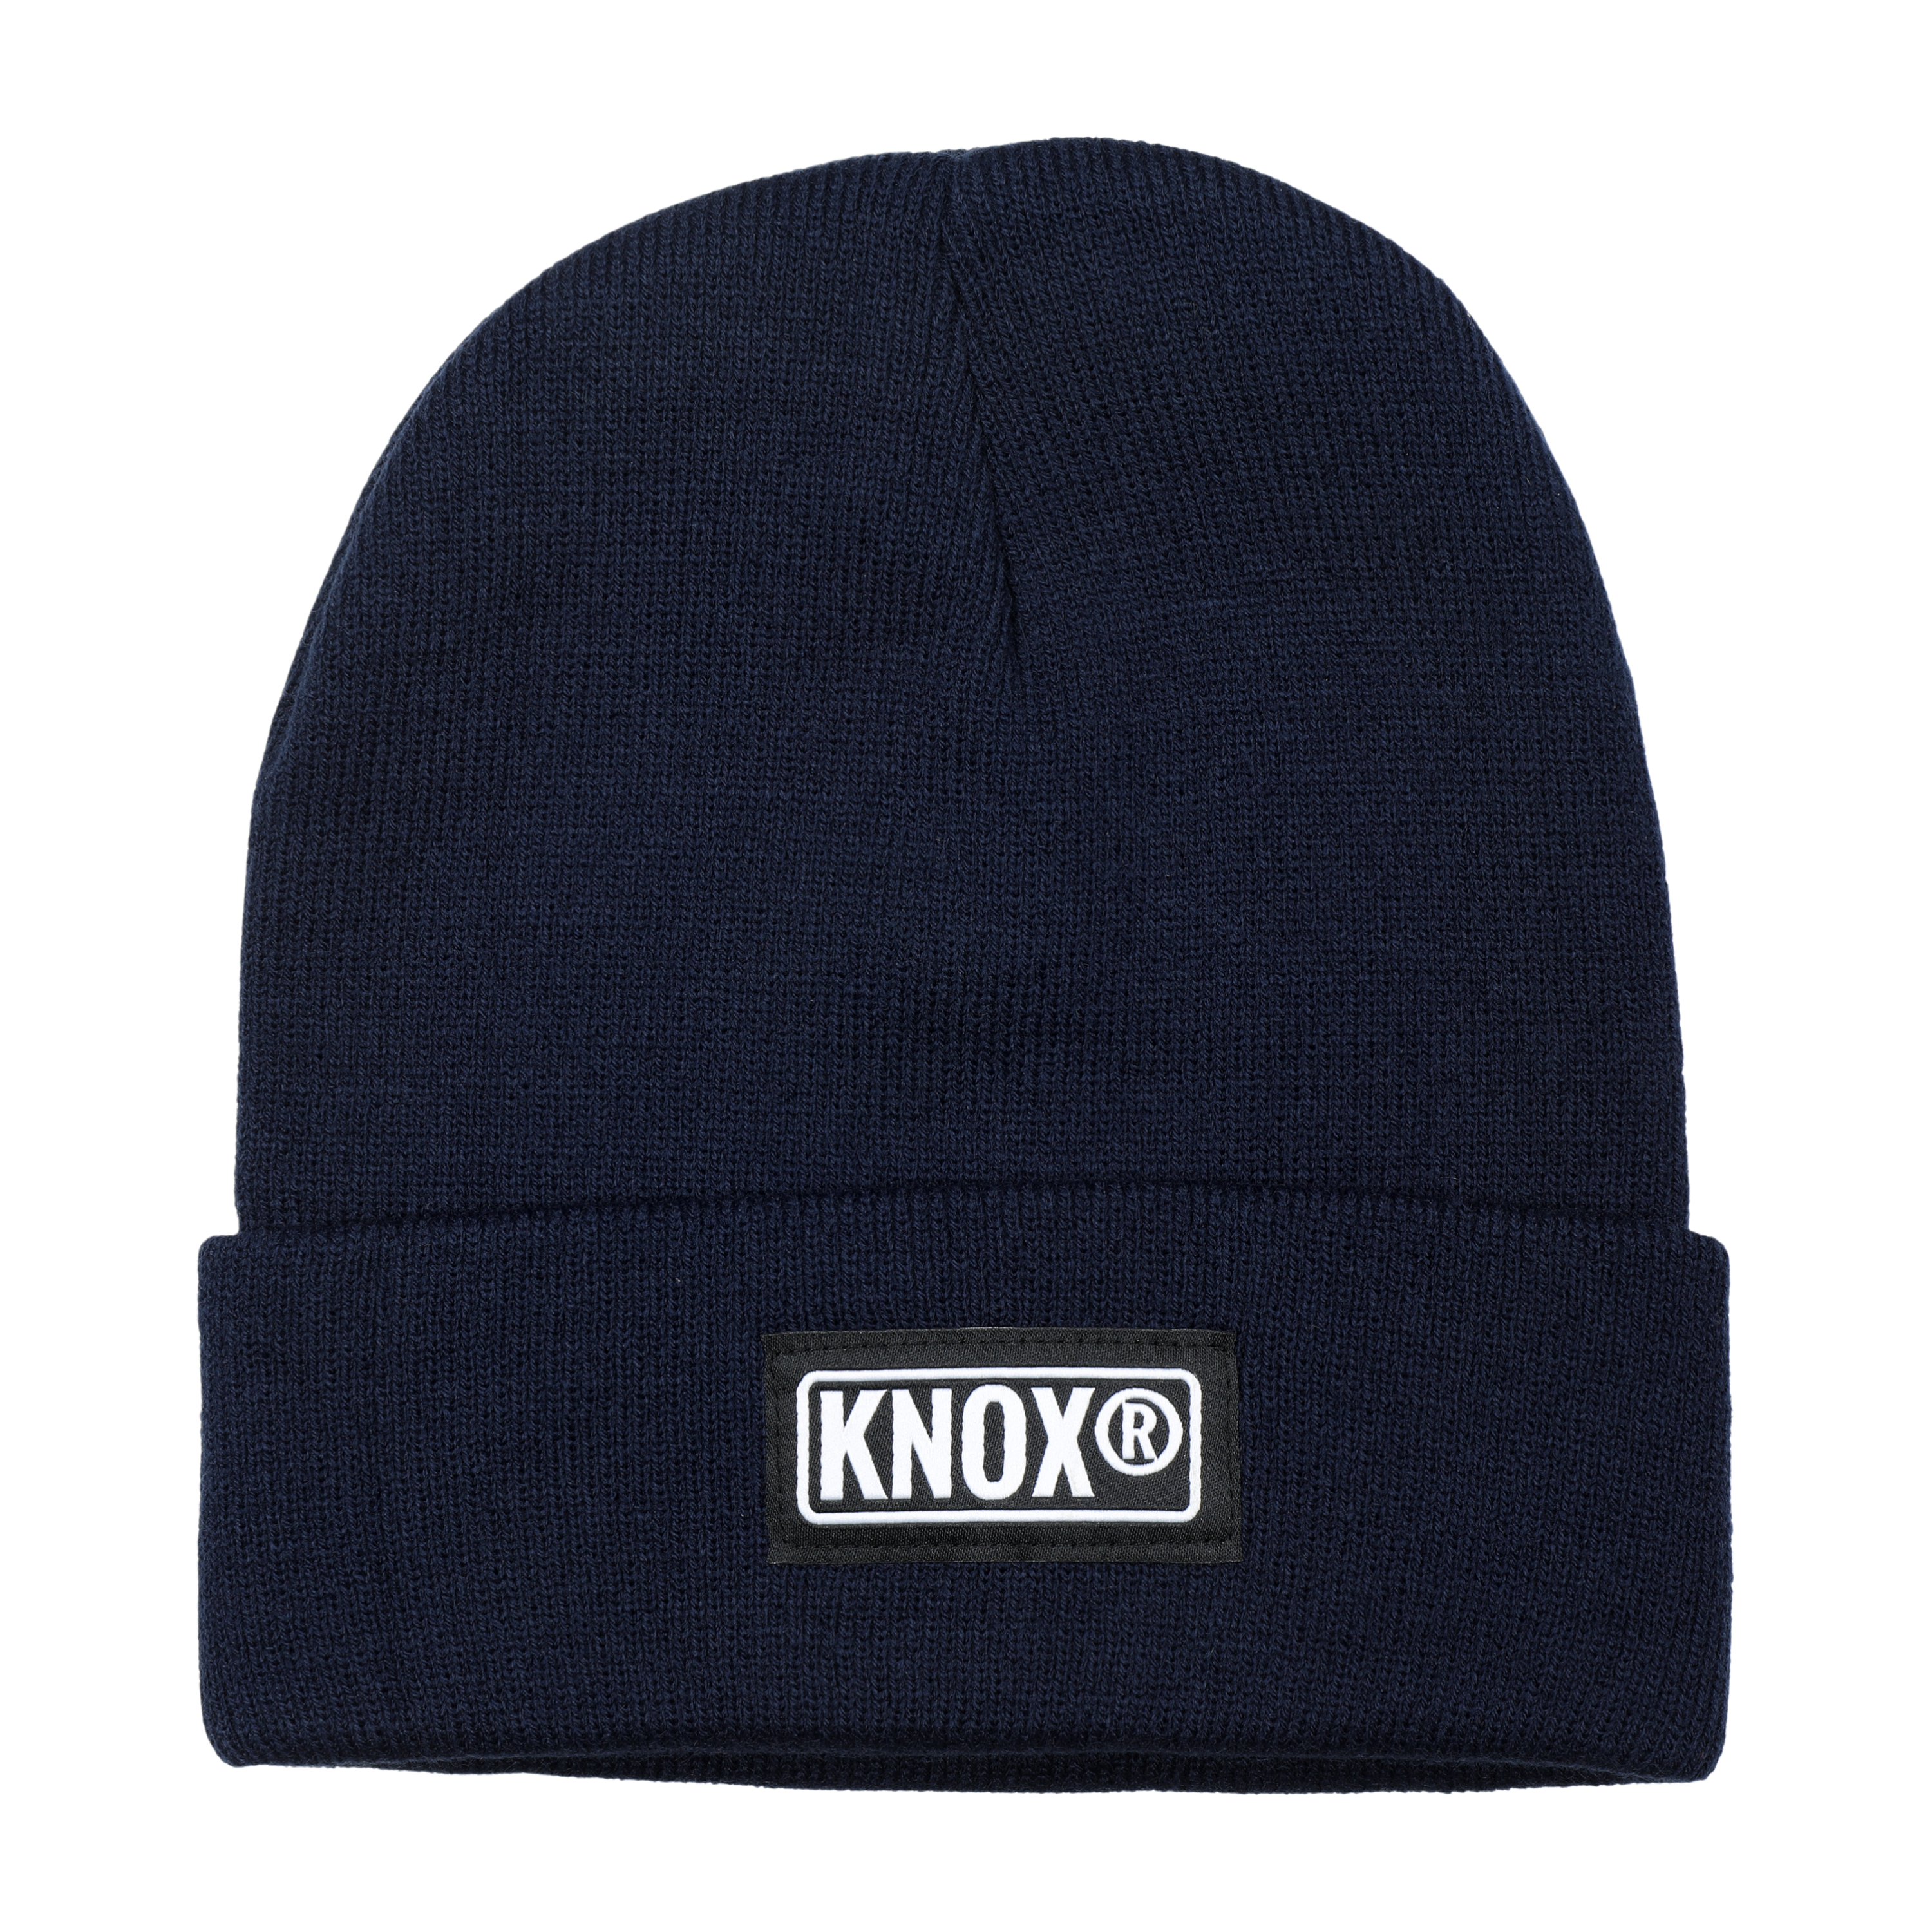 Knox Knit Cuffed Navy Blue Beanie